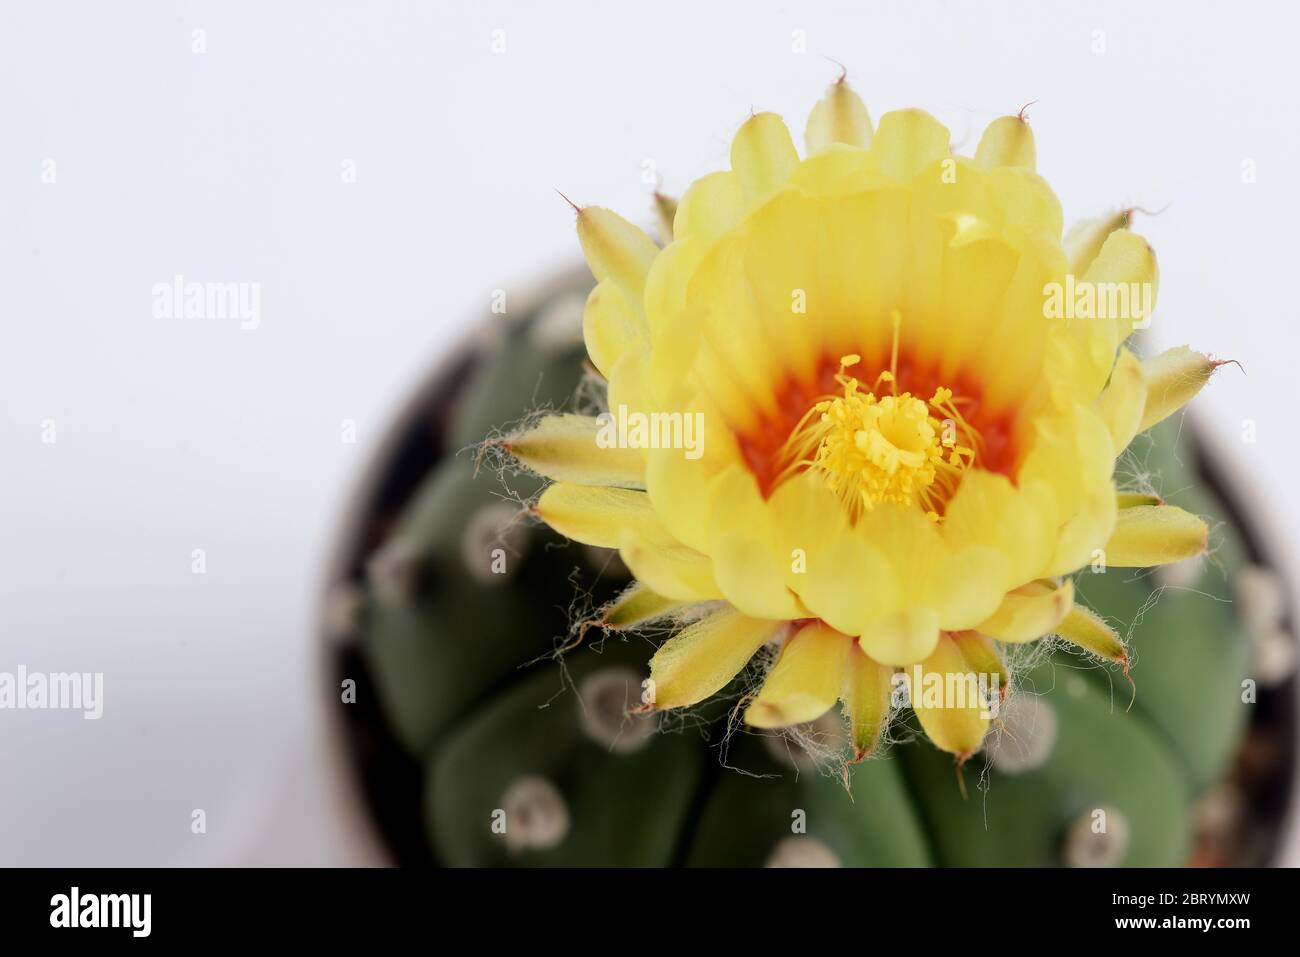 Astrophythum asterias nudum or sand dollar cactus, sea urchin cactus, star cactus and star peyote. Stock Photo